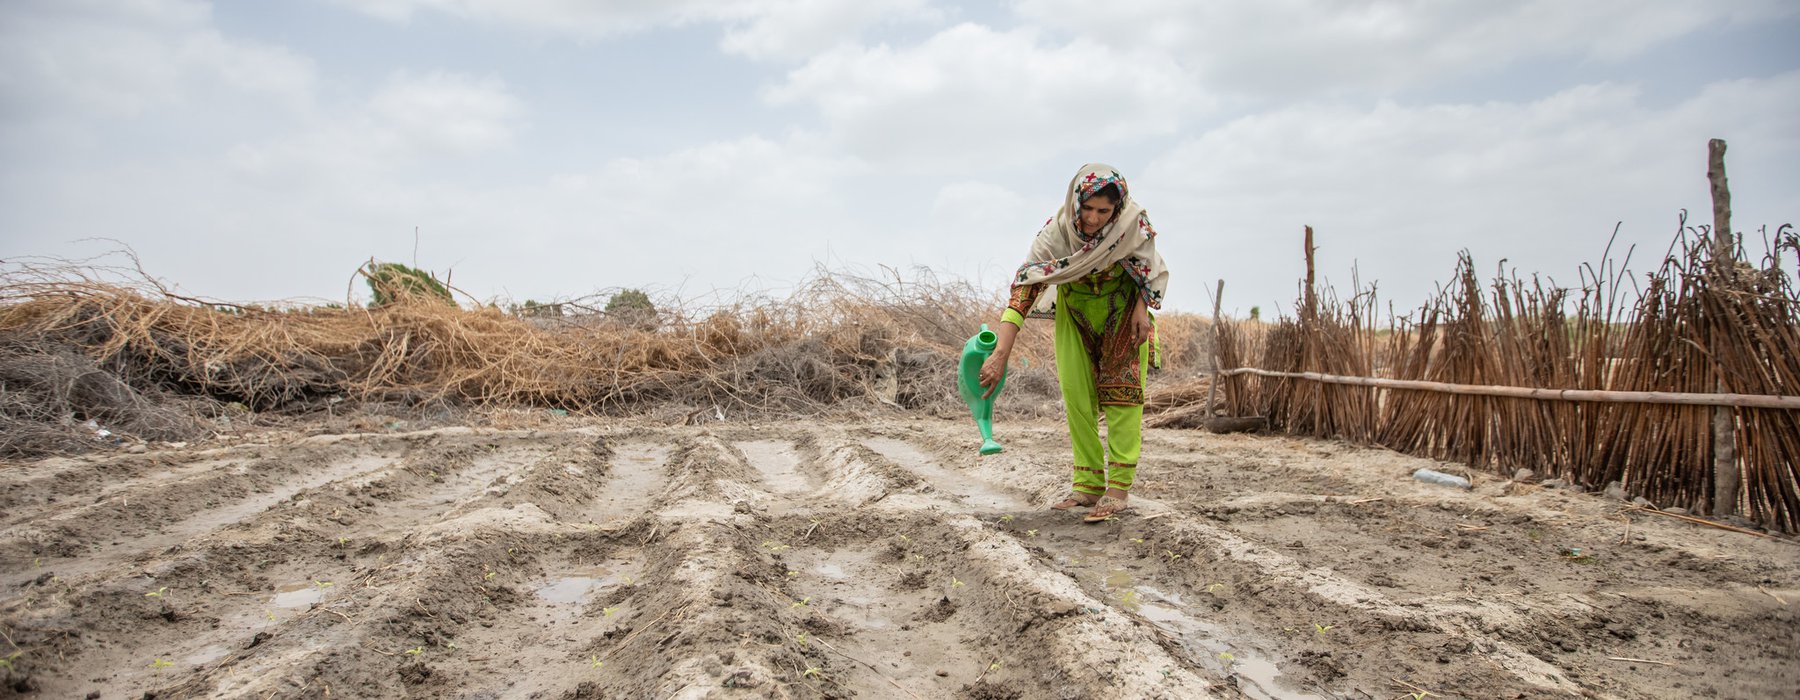 Hooran watering a barren chalky muddy field in pakistan with a green watering can